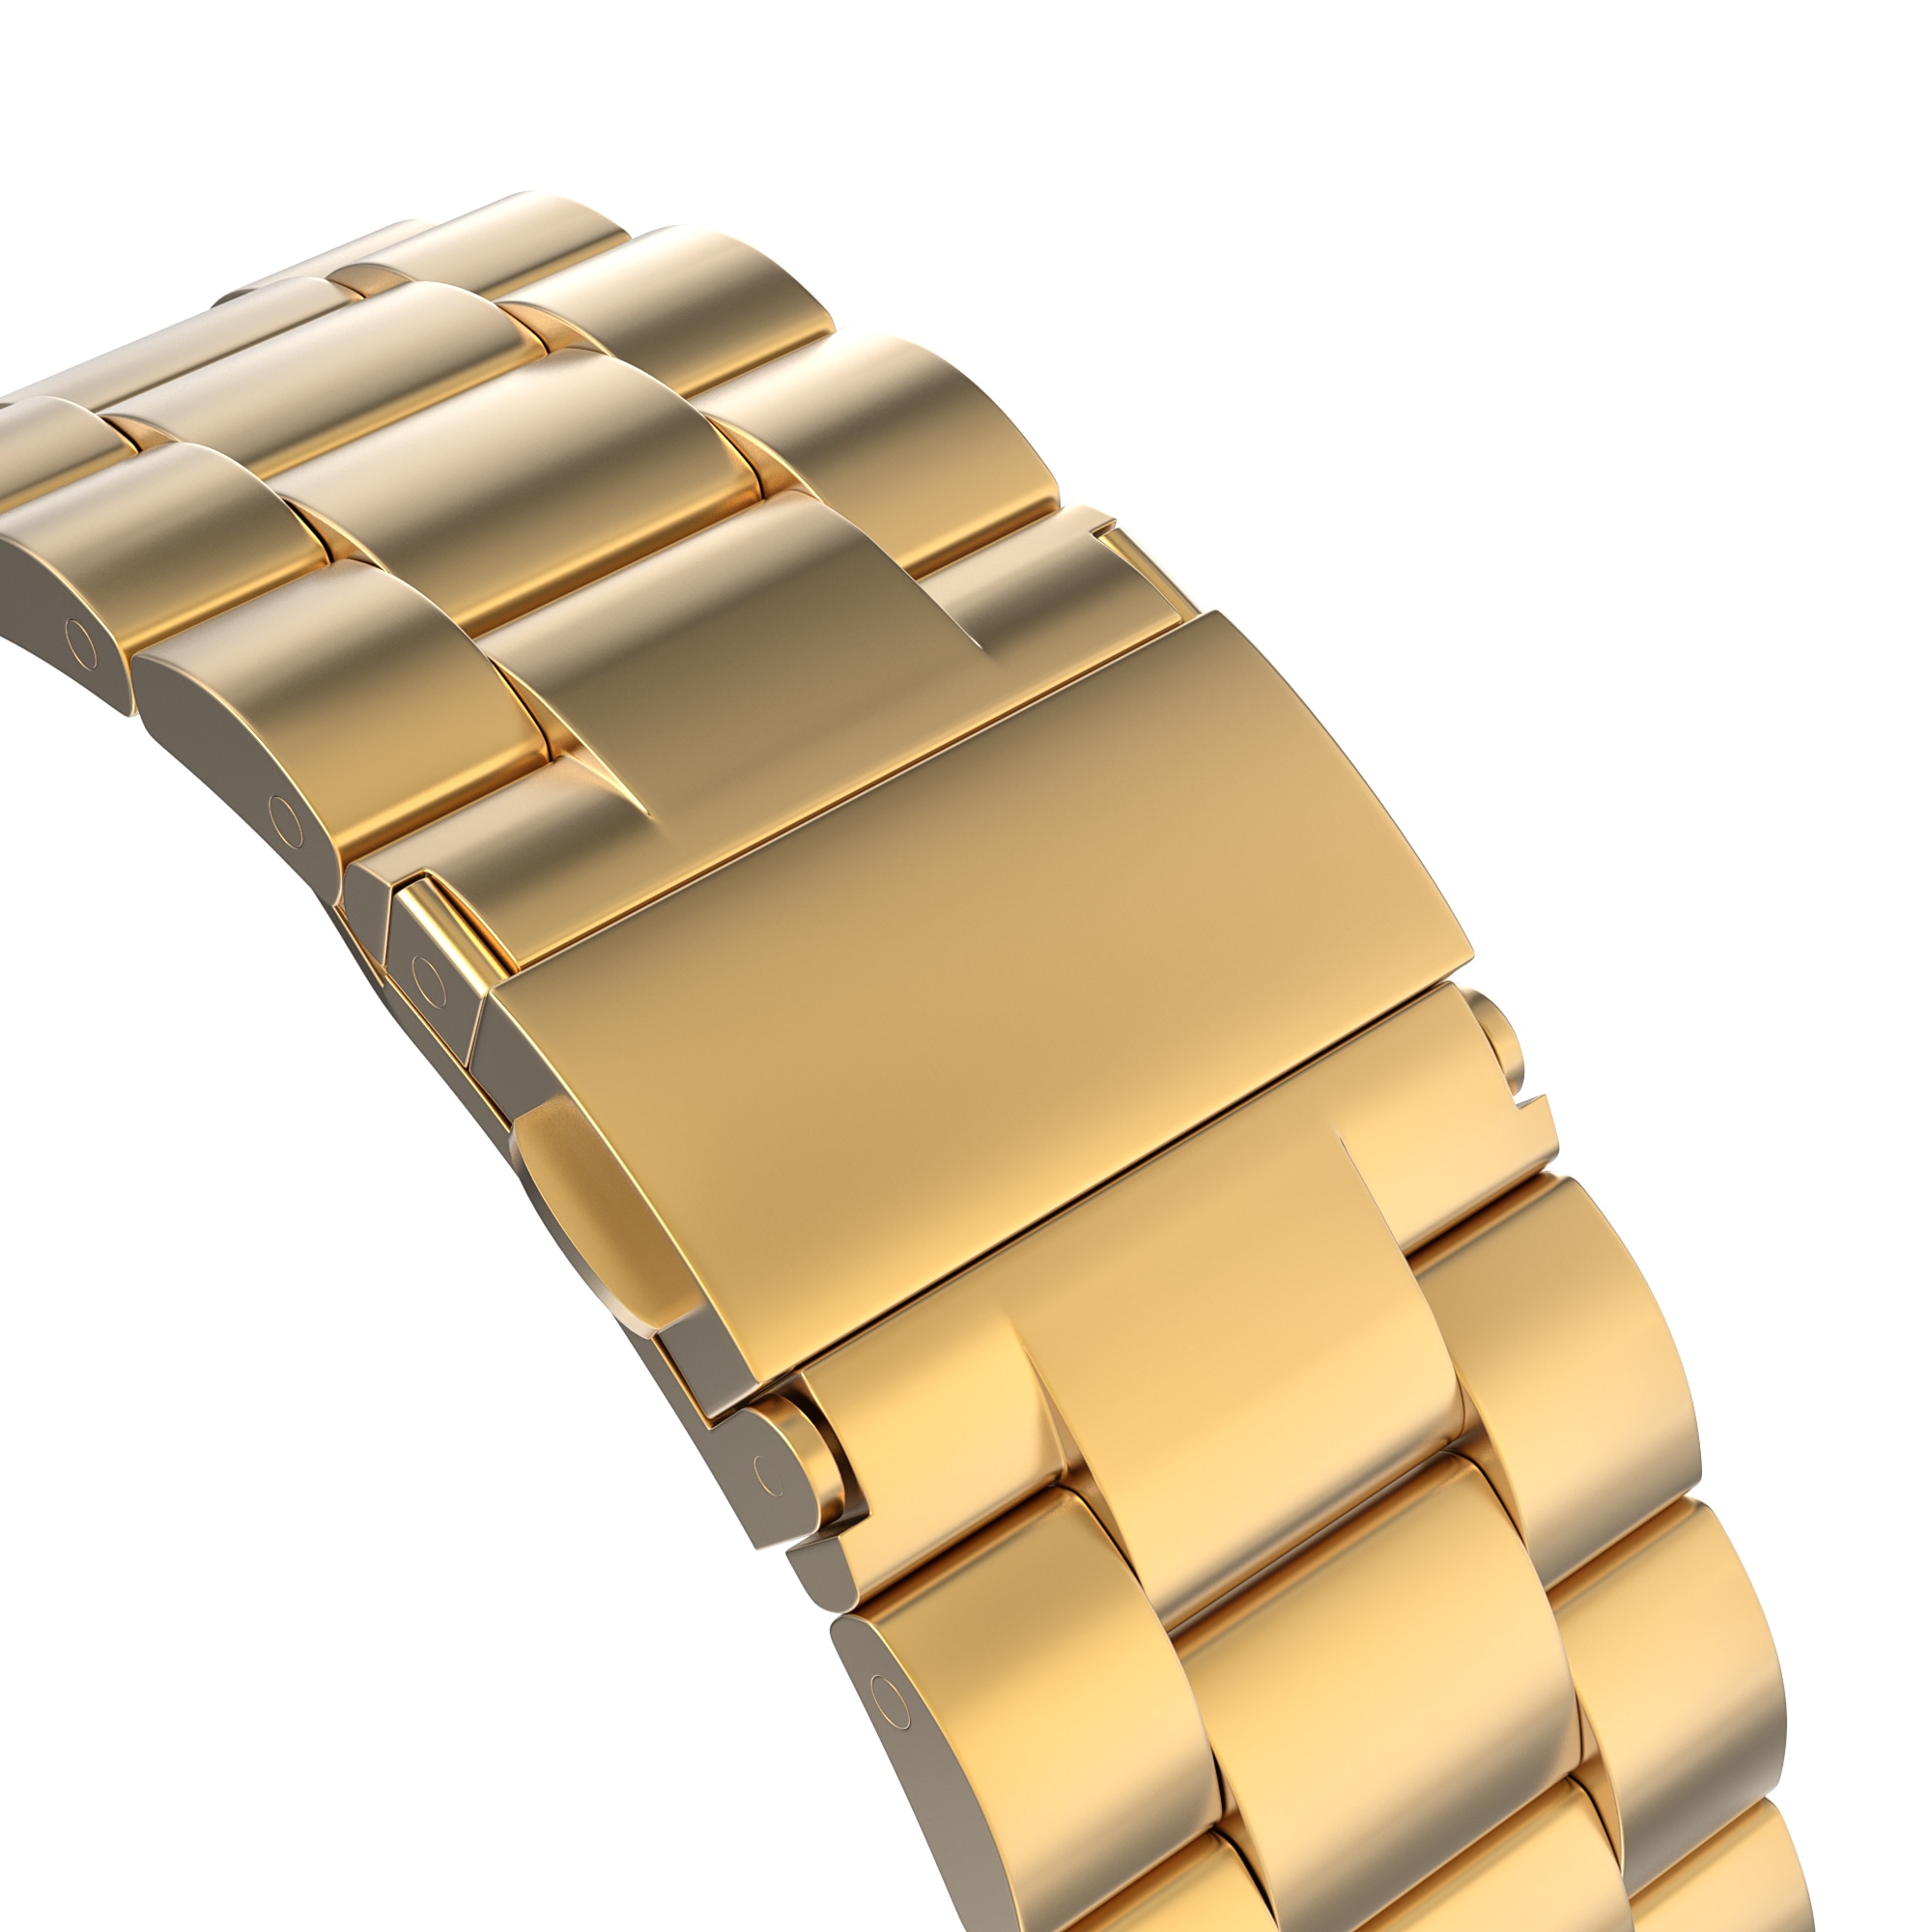 Metallarmband Apple Watch SE 40mm guld